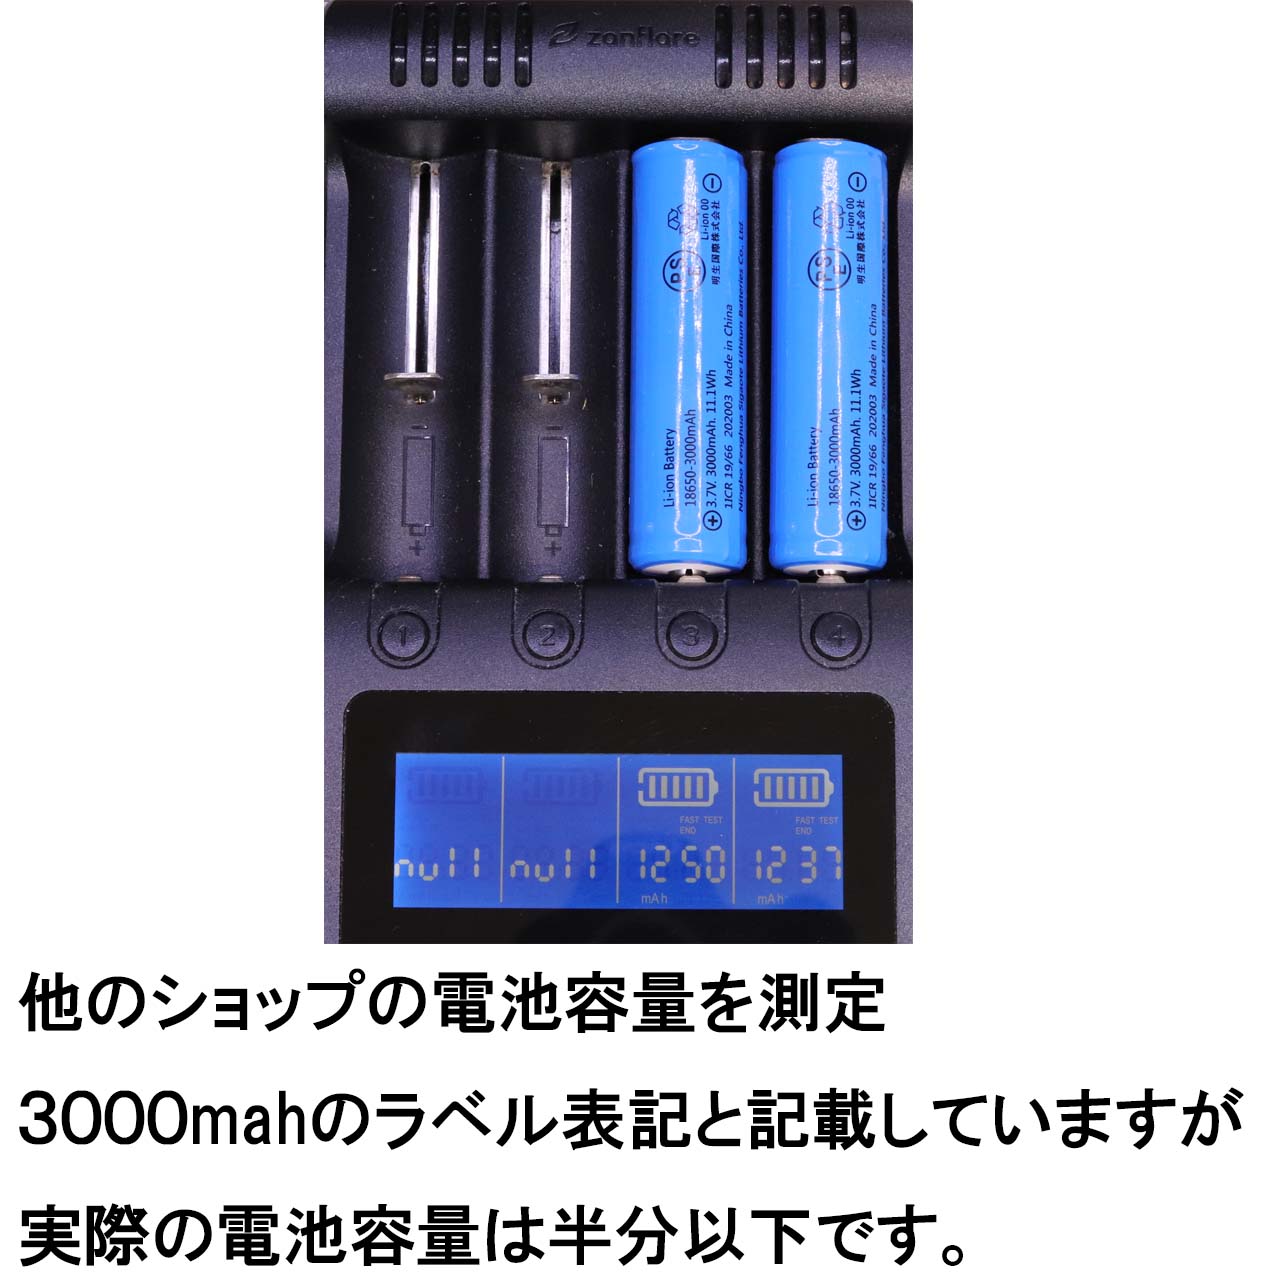 18650 lithium ион перезаряжаемая батарея аккумулятор PSE Flat модель cell собственное производство 2600mah